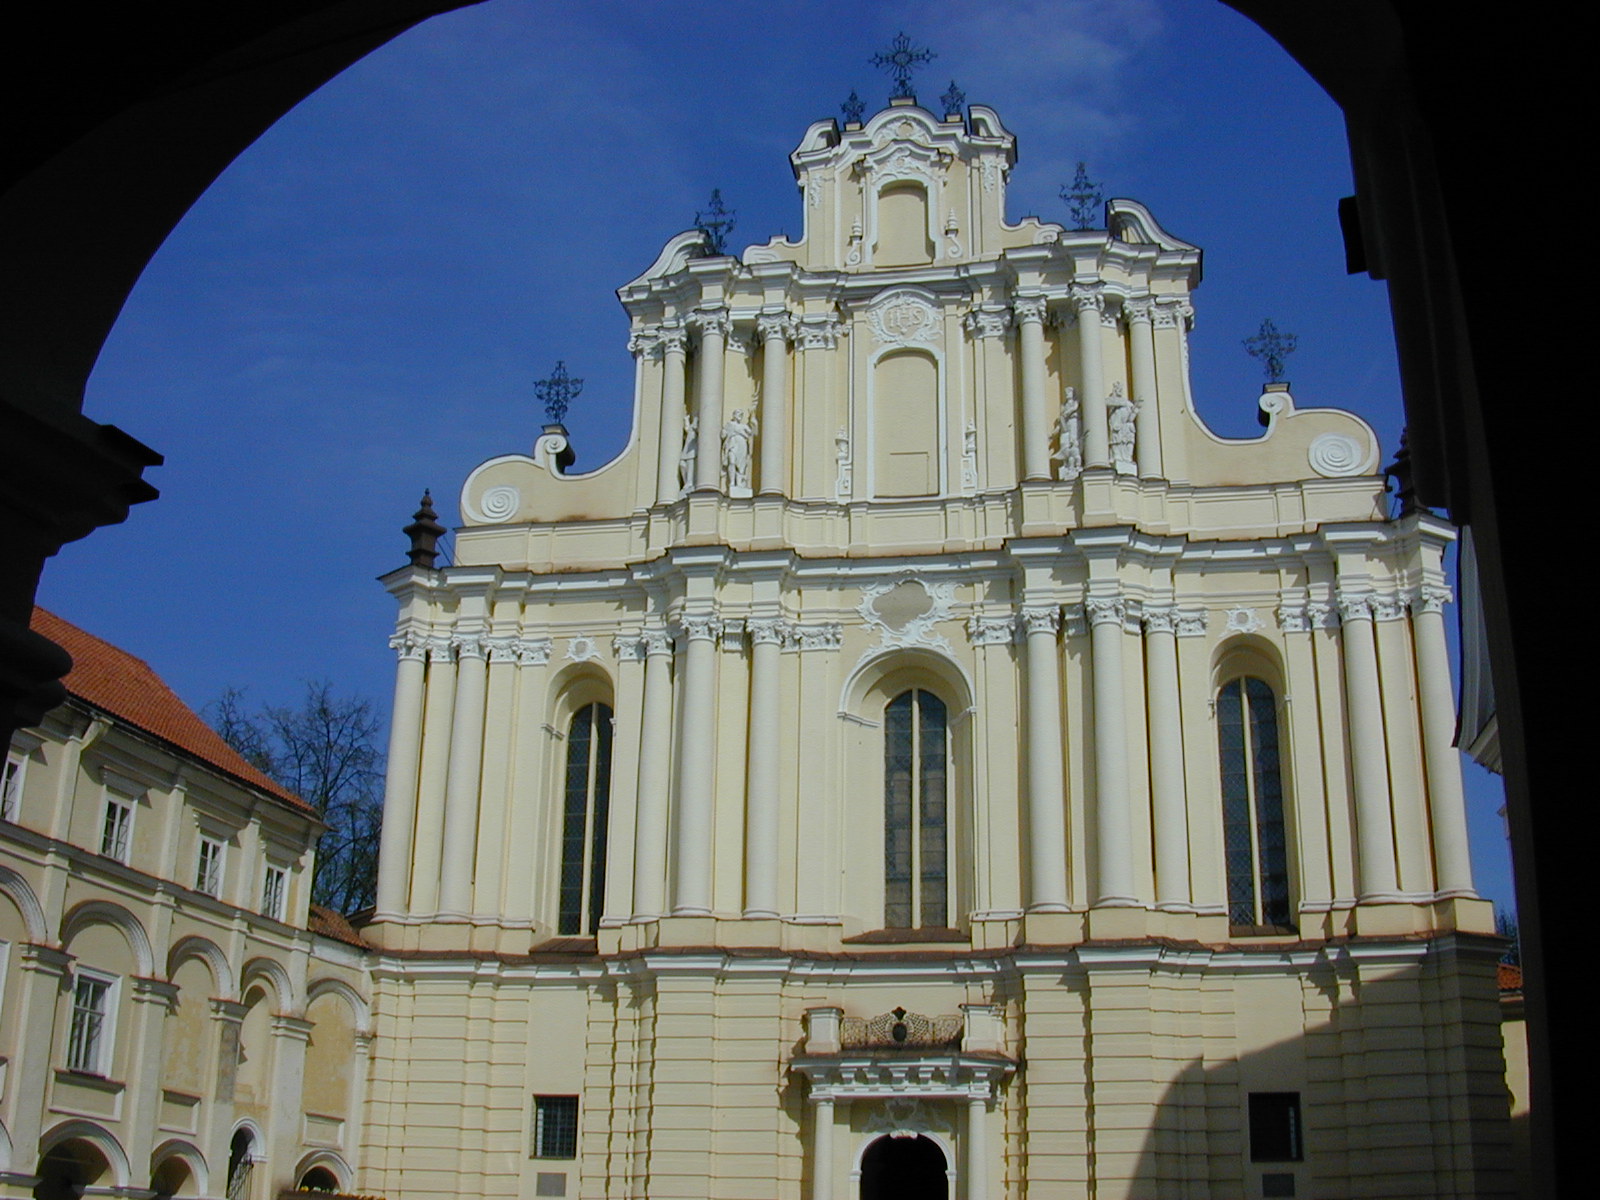 Šv. Jono g. 12, Vilnius